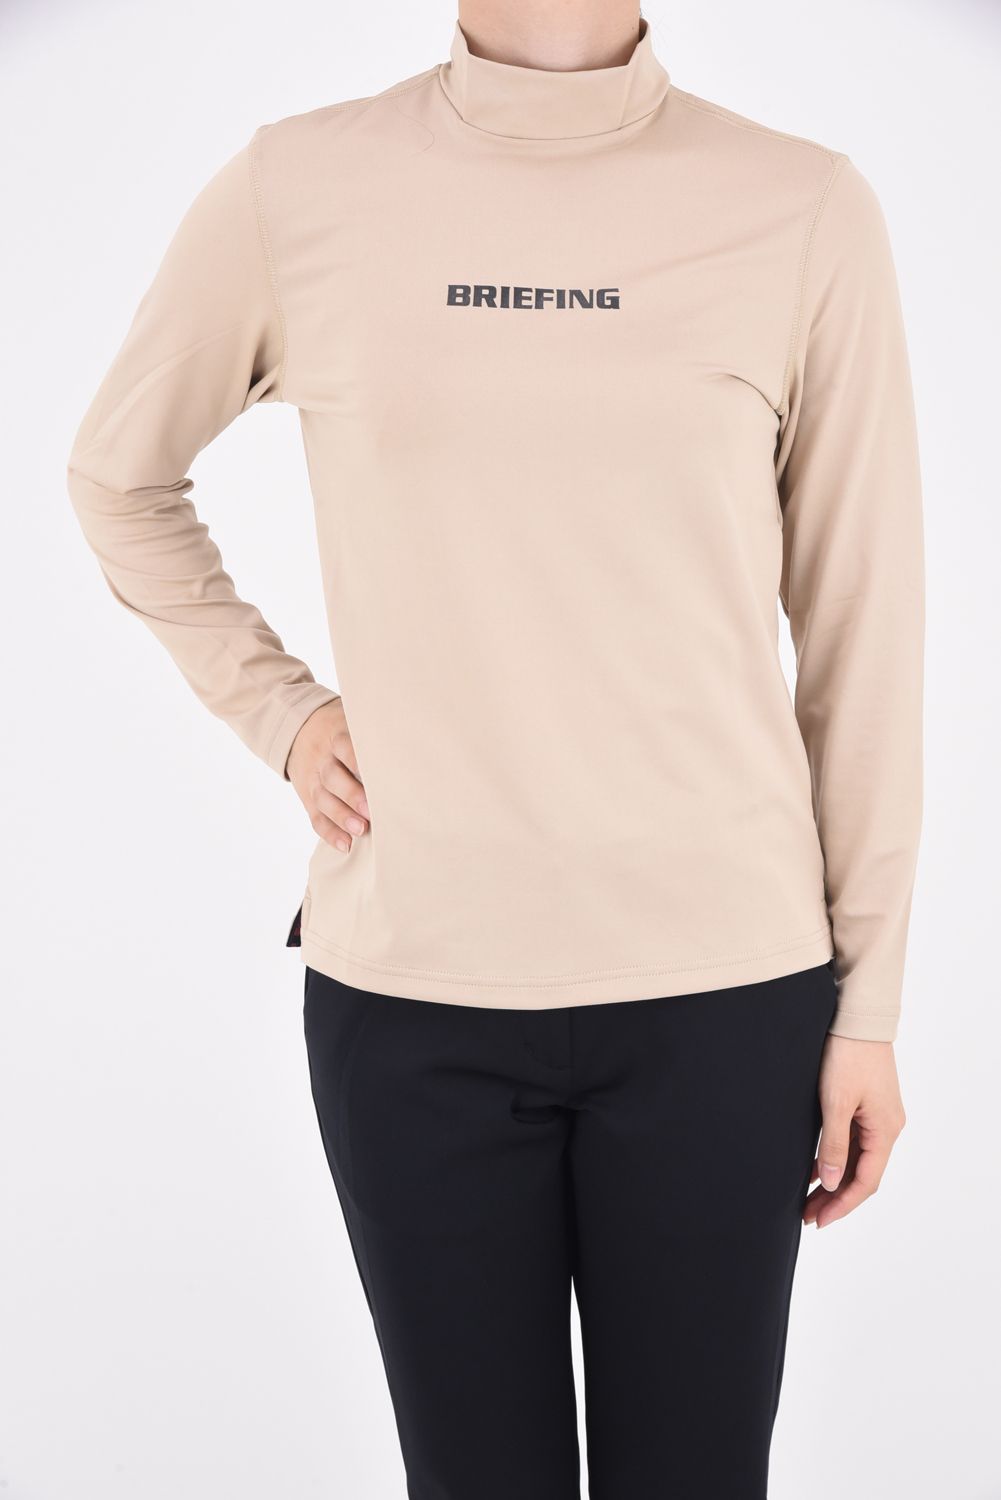 BRIEFING - 【レディース】 WOMENS LS HIGH NECK / ブランドロゴ 